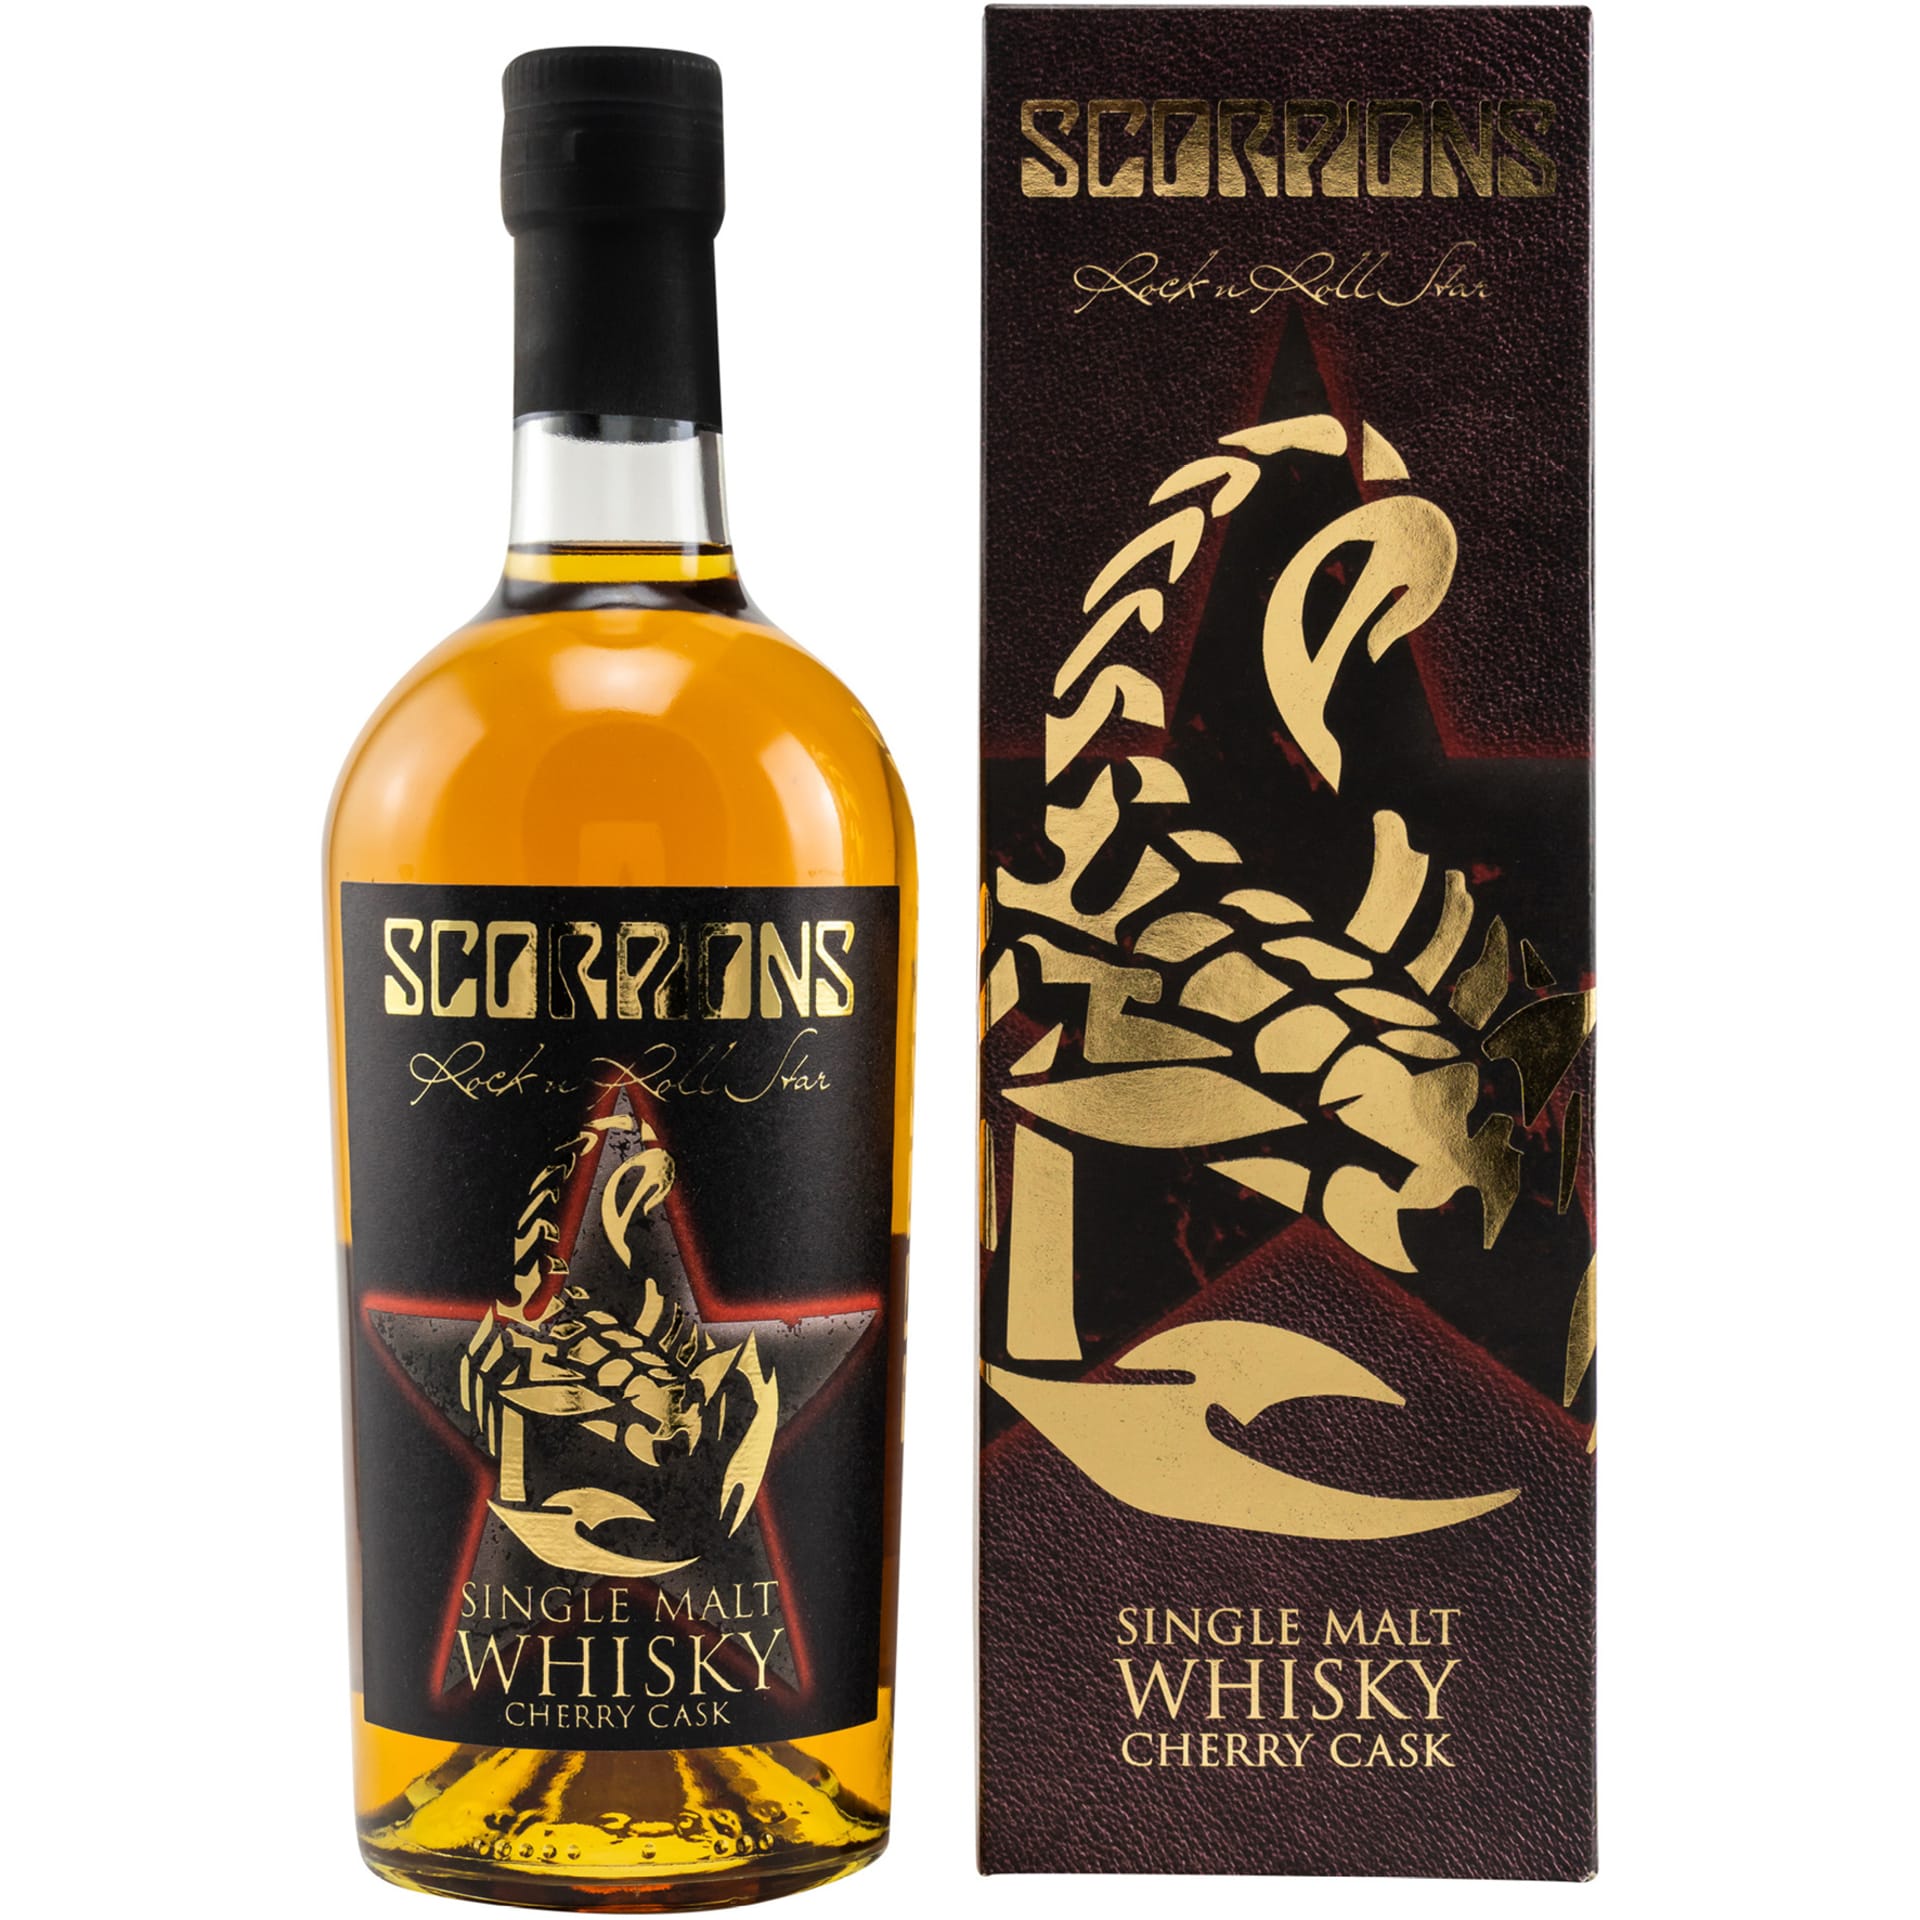 Scorpions RocknRoll Star Single Malt Whisky